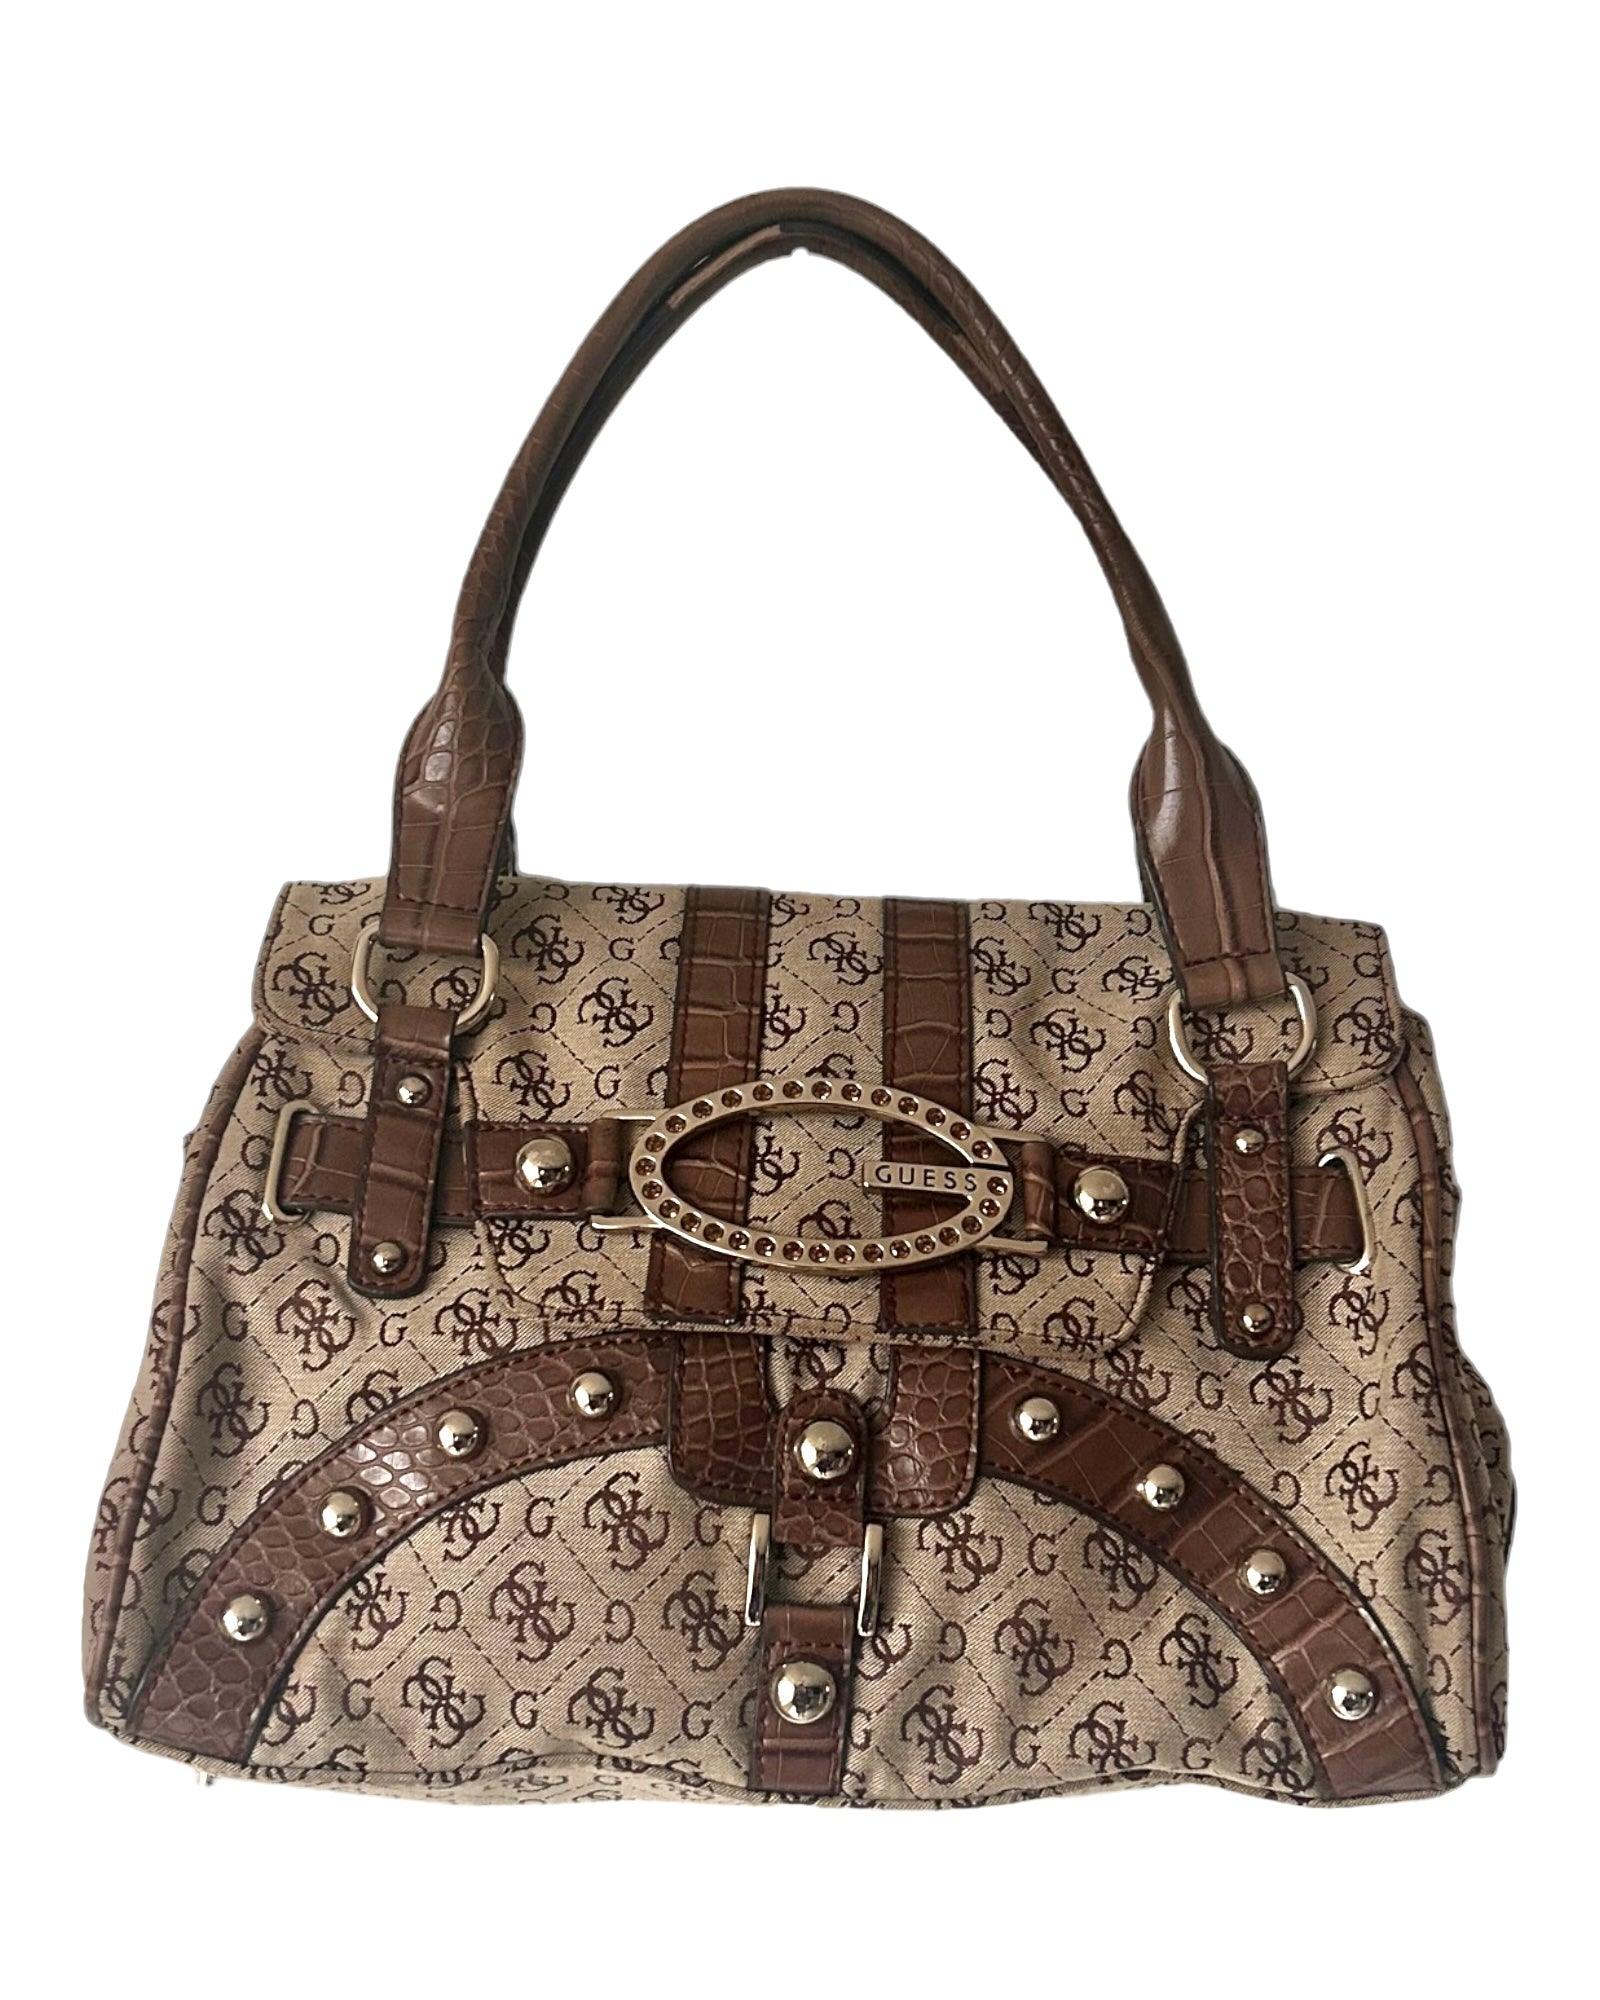 GUESS Women Handbag Monogram G Logo Print Brown Purse Shoulder Bag | eBay